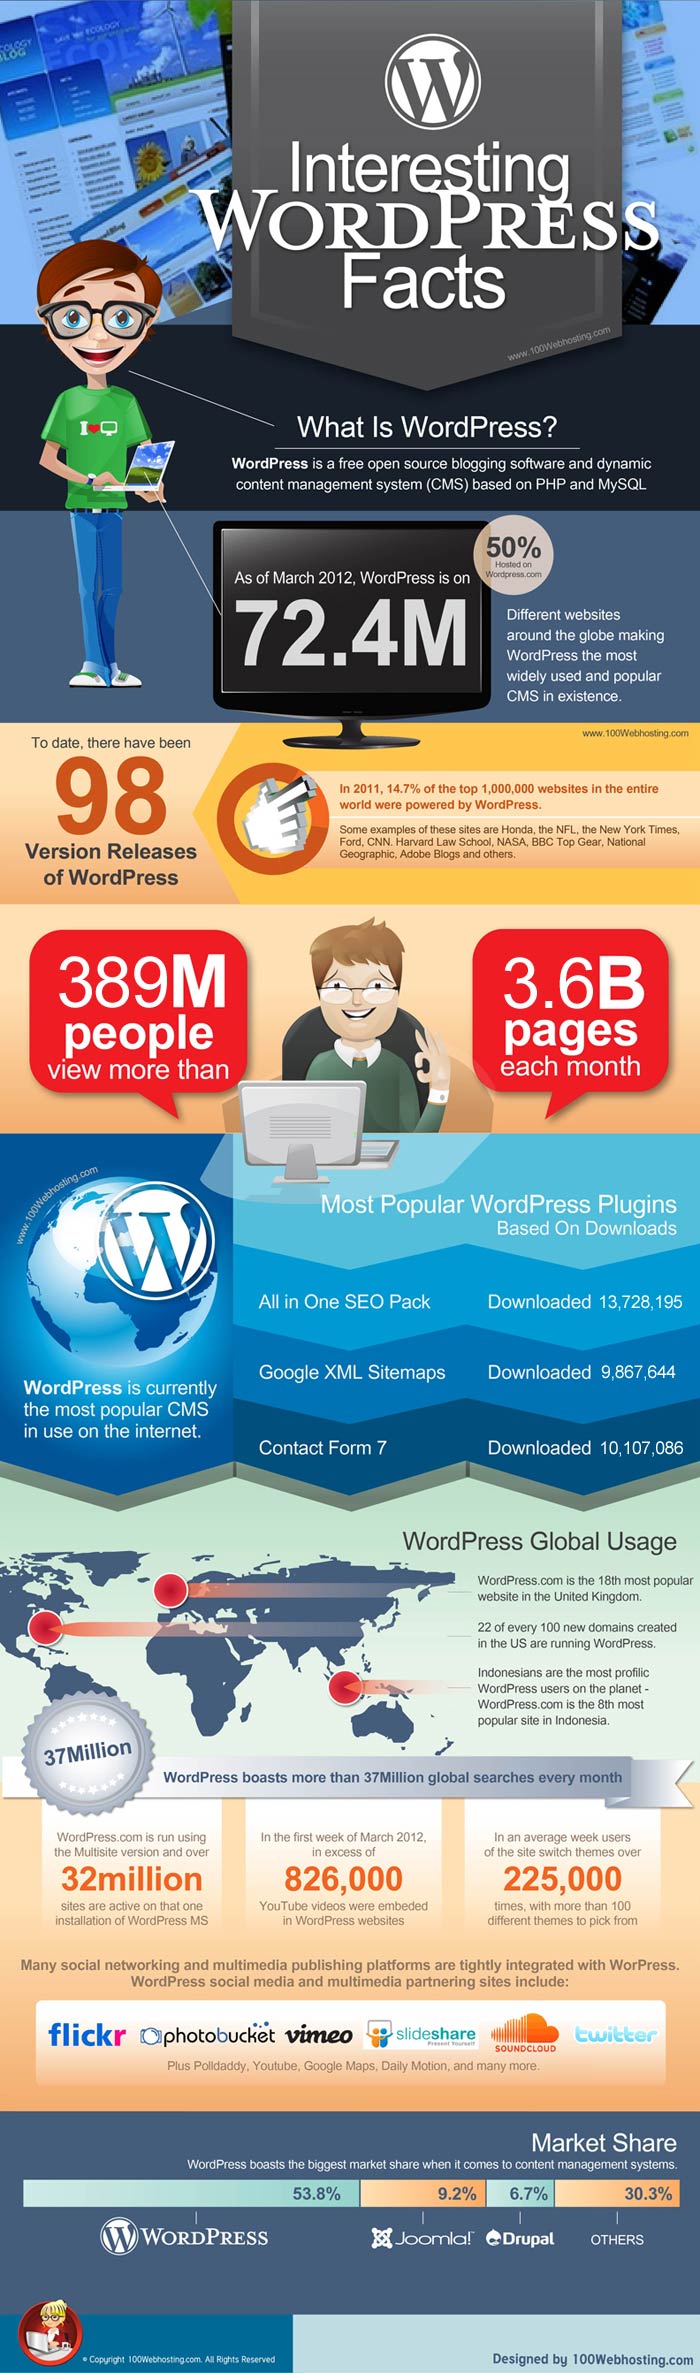 Interesting-WordPress-Facts-Infographic.jpg